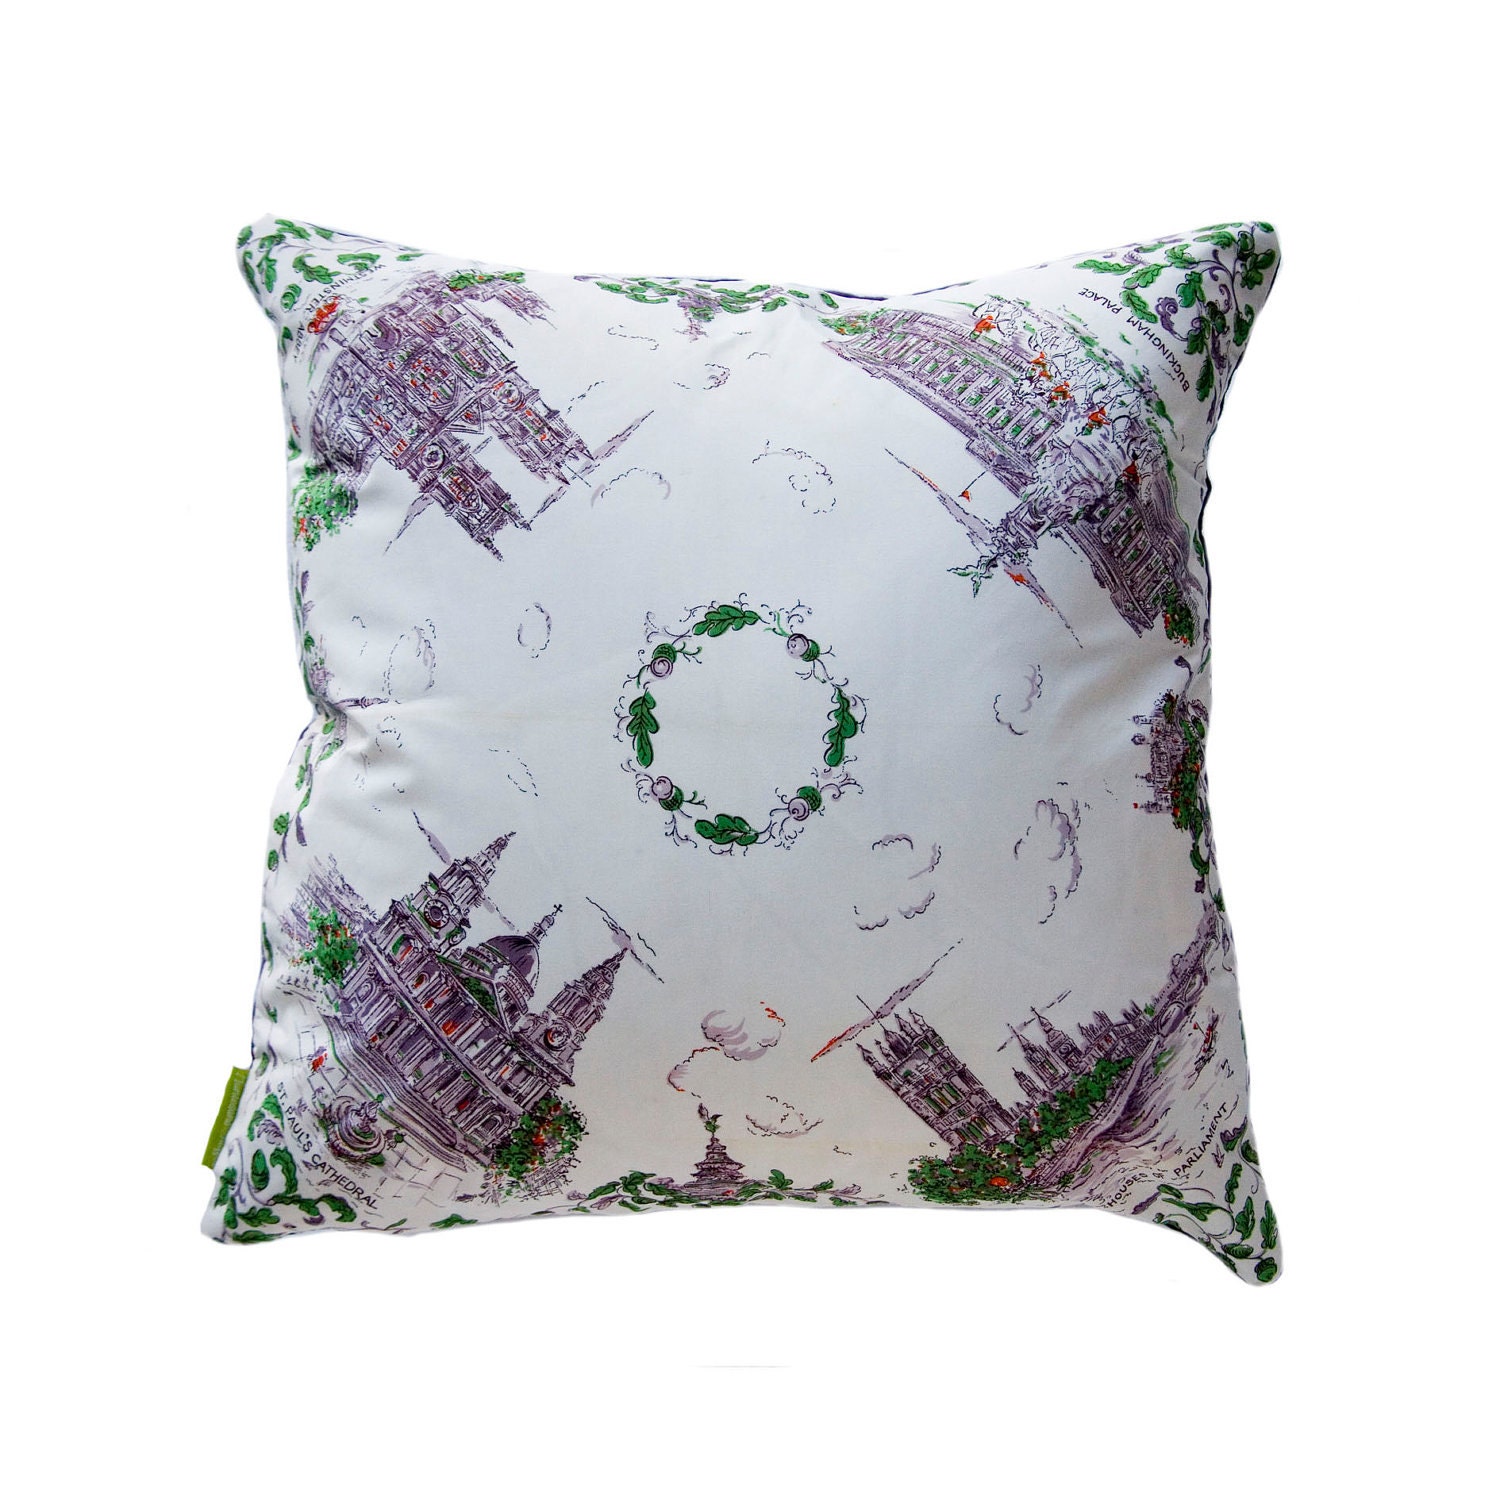 Purple London silk scarf pillow cushion 19" 1950s Mid-Century Tourist Souvenir Landmarks Shabby Chic Boho